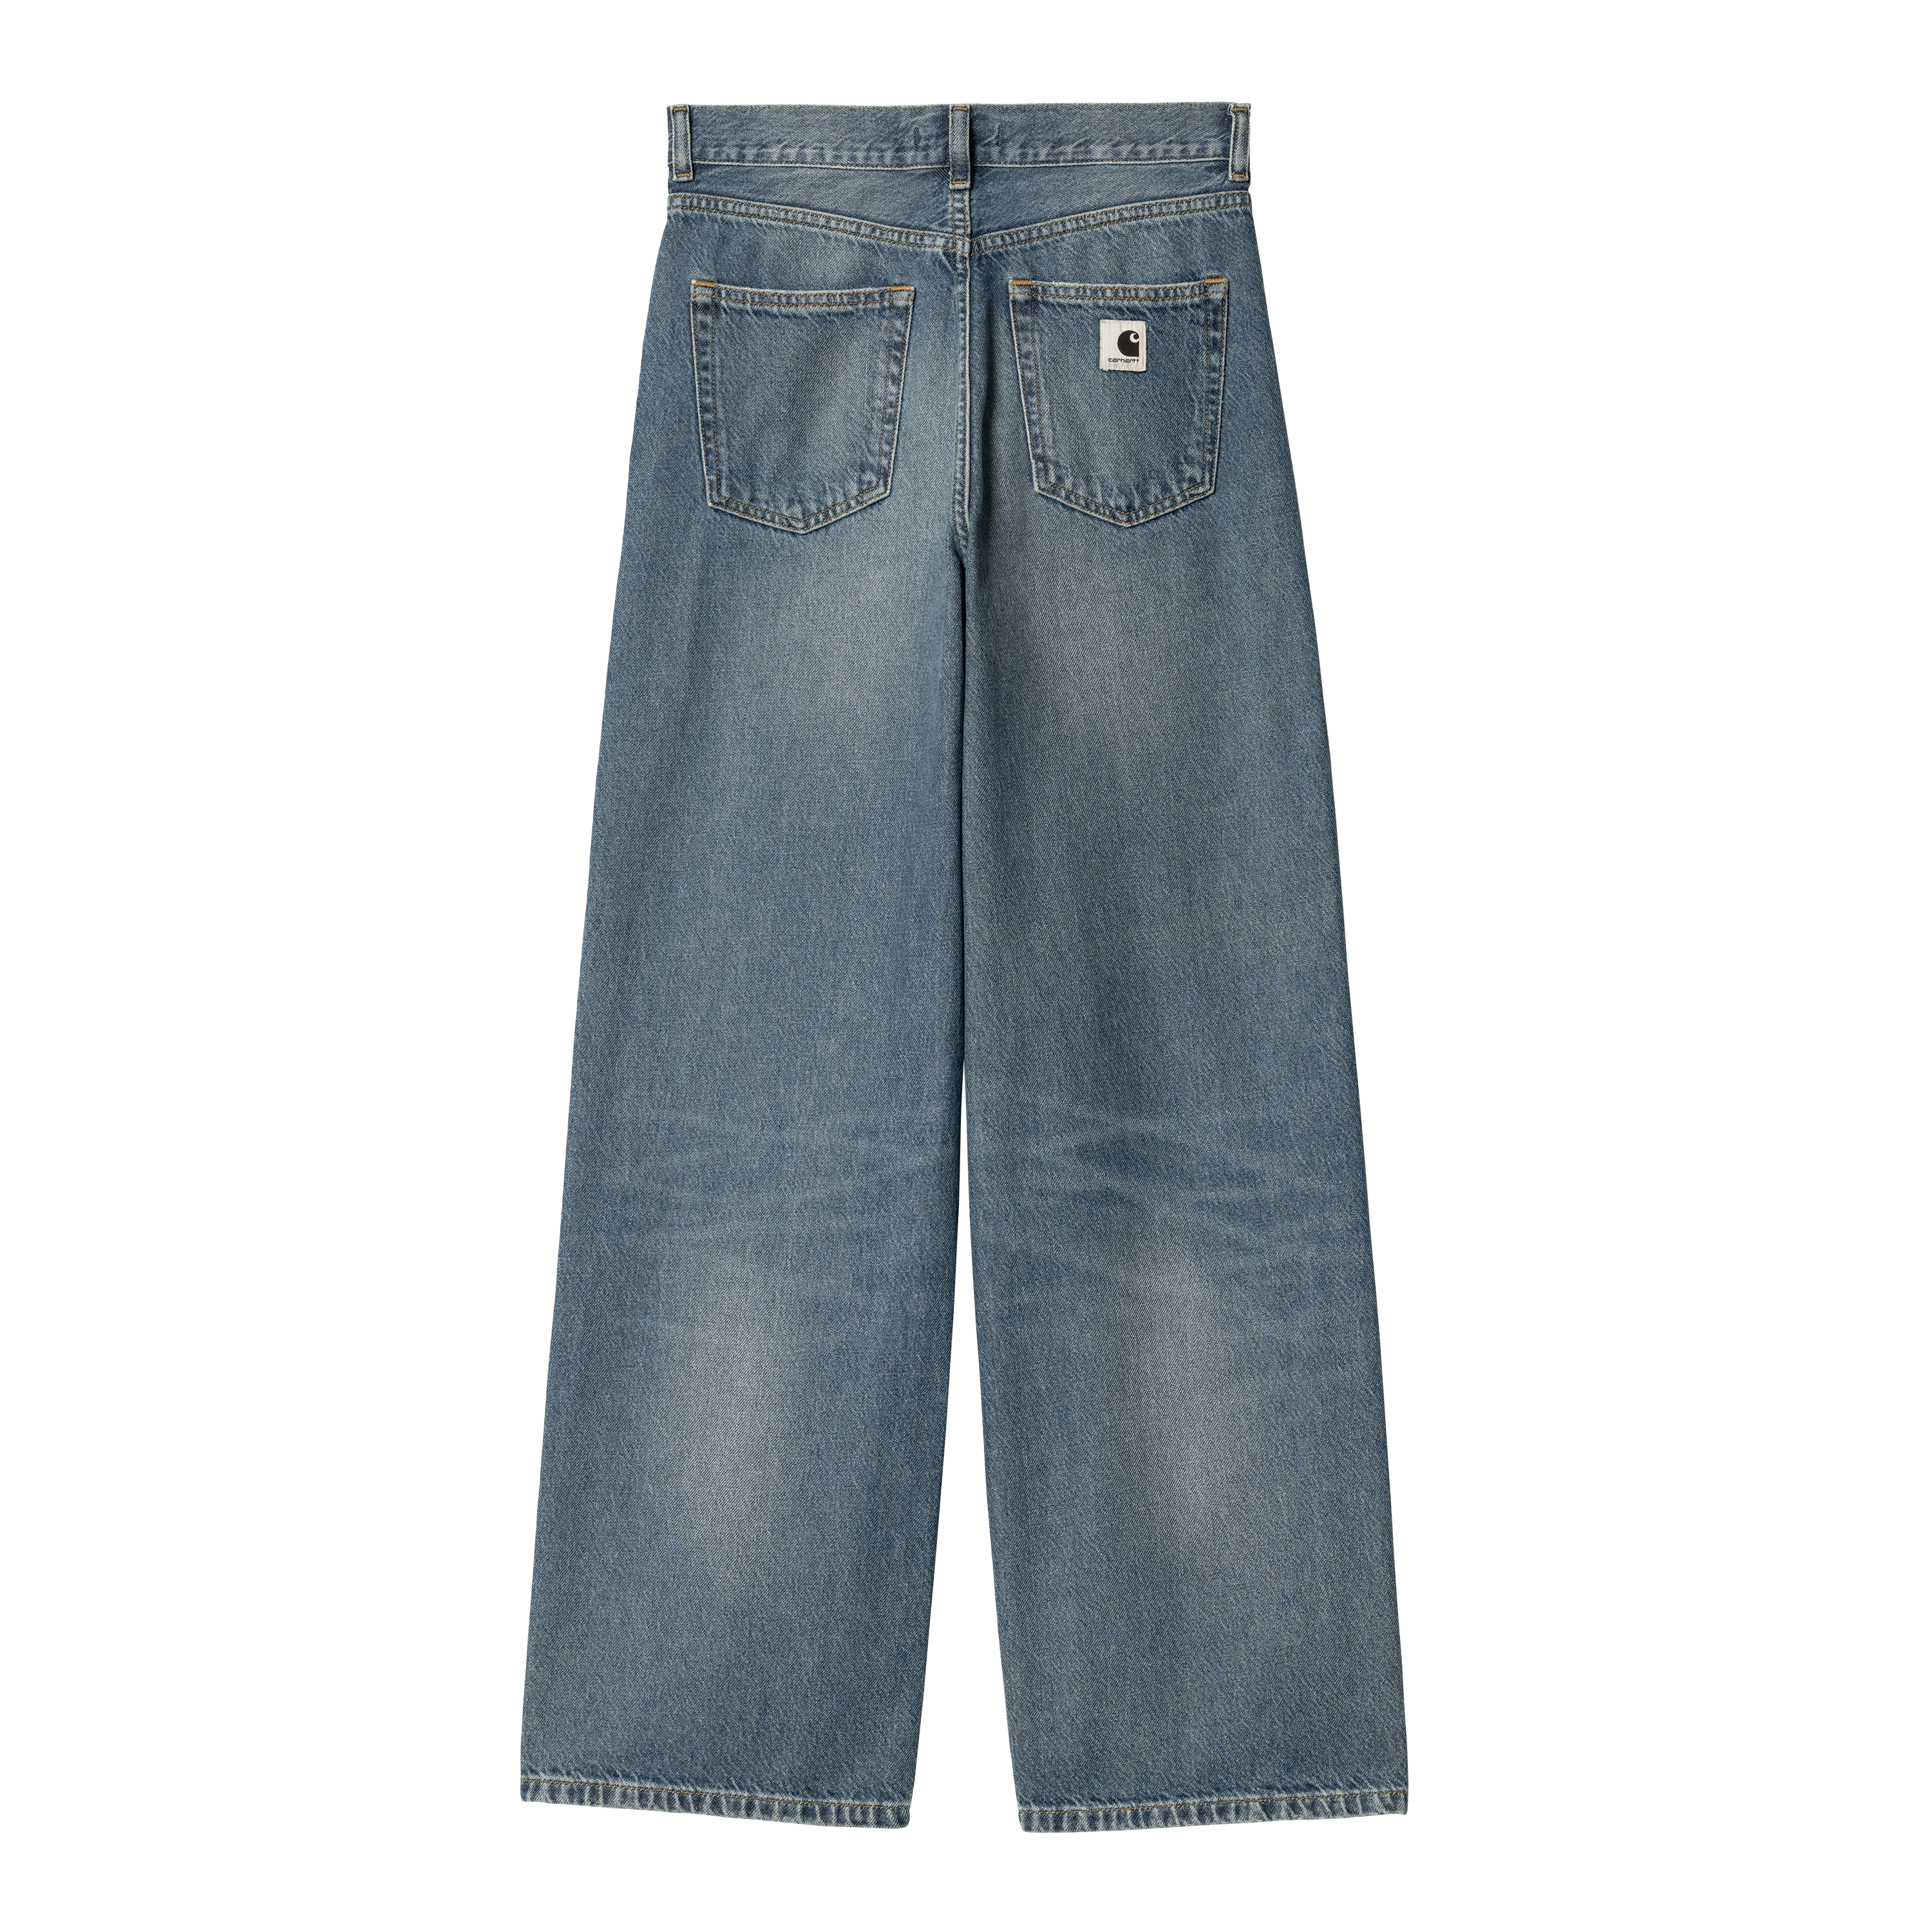 Carhartt Slim Fit Layton Bootcut Jeans (rainwash) Women's Jeans in